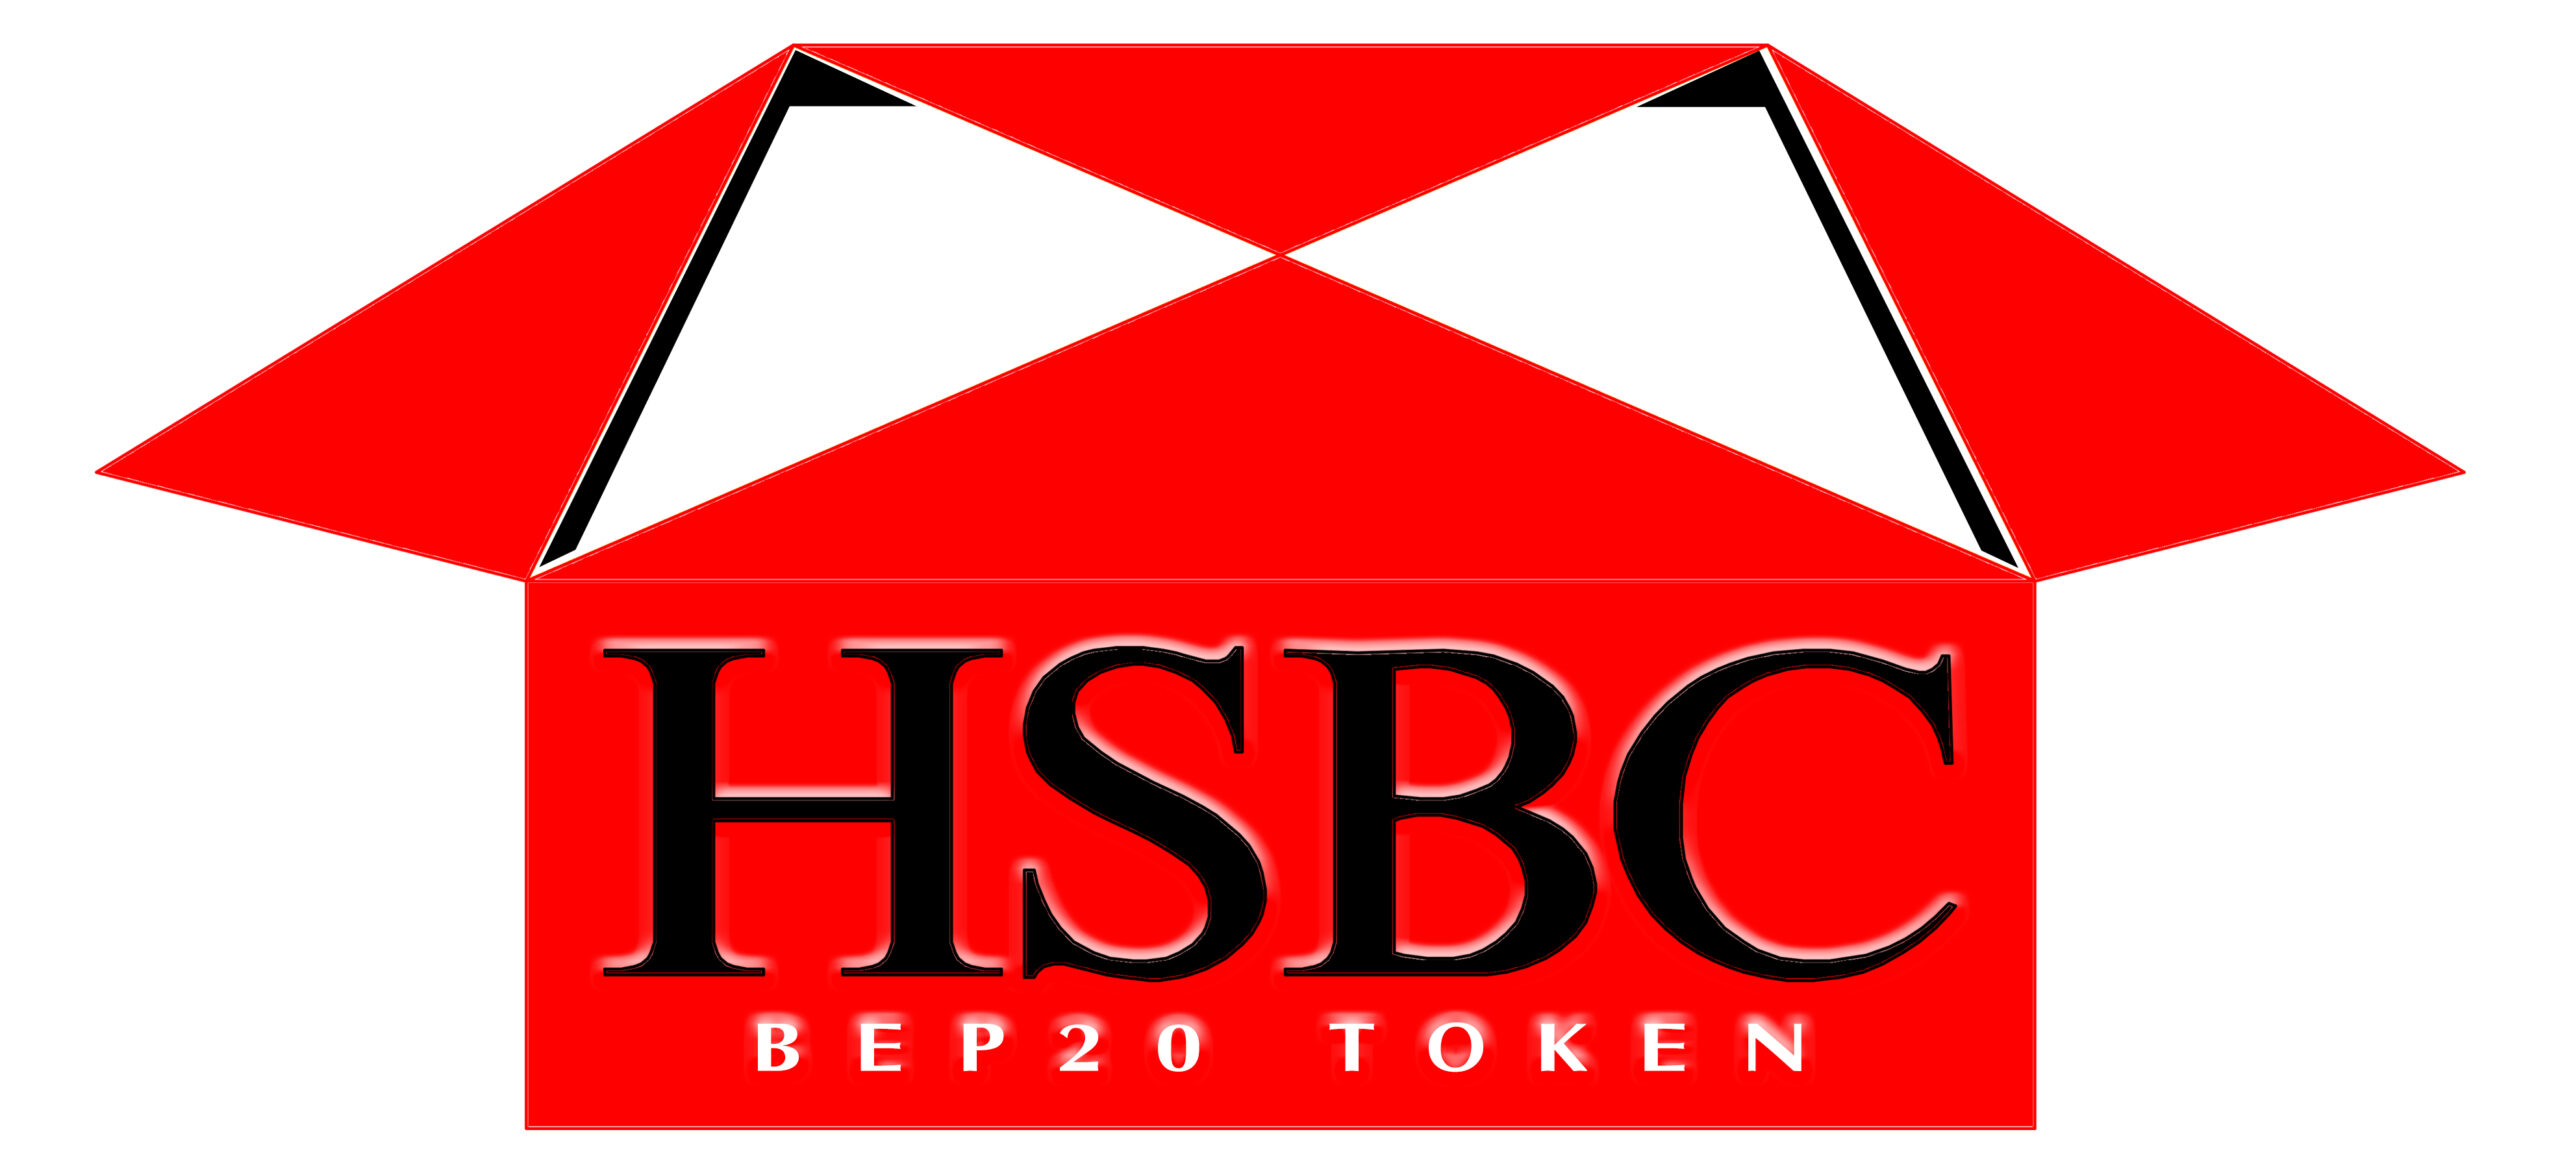 HSBC Token